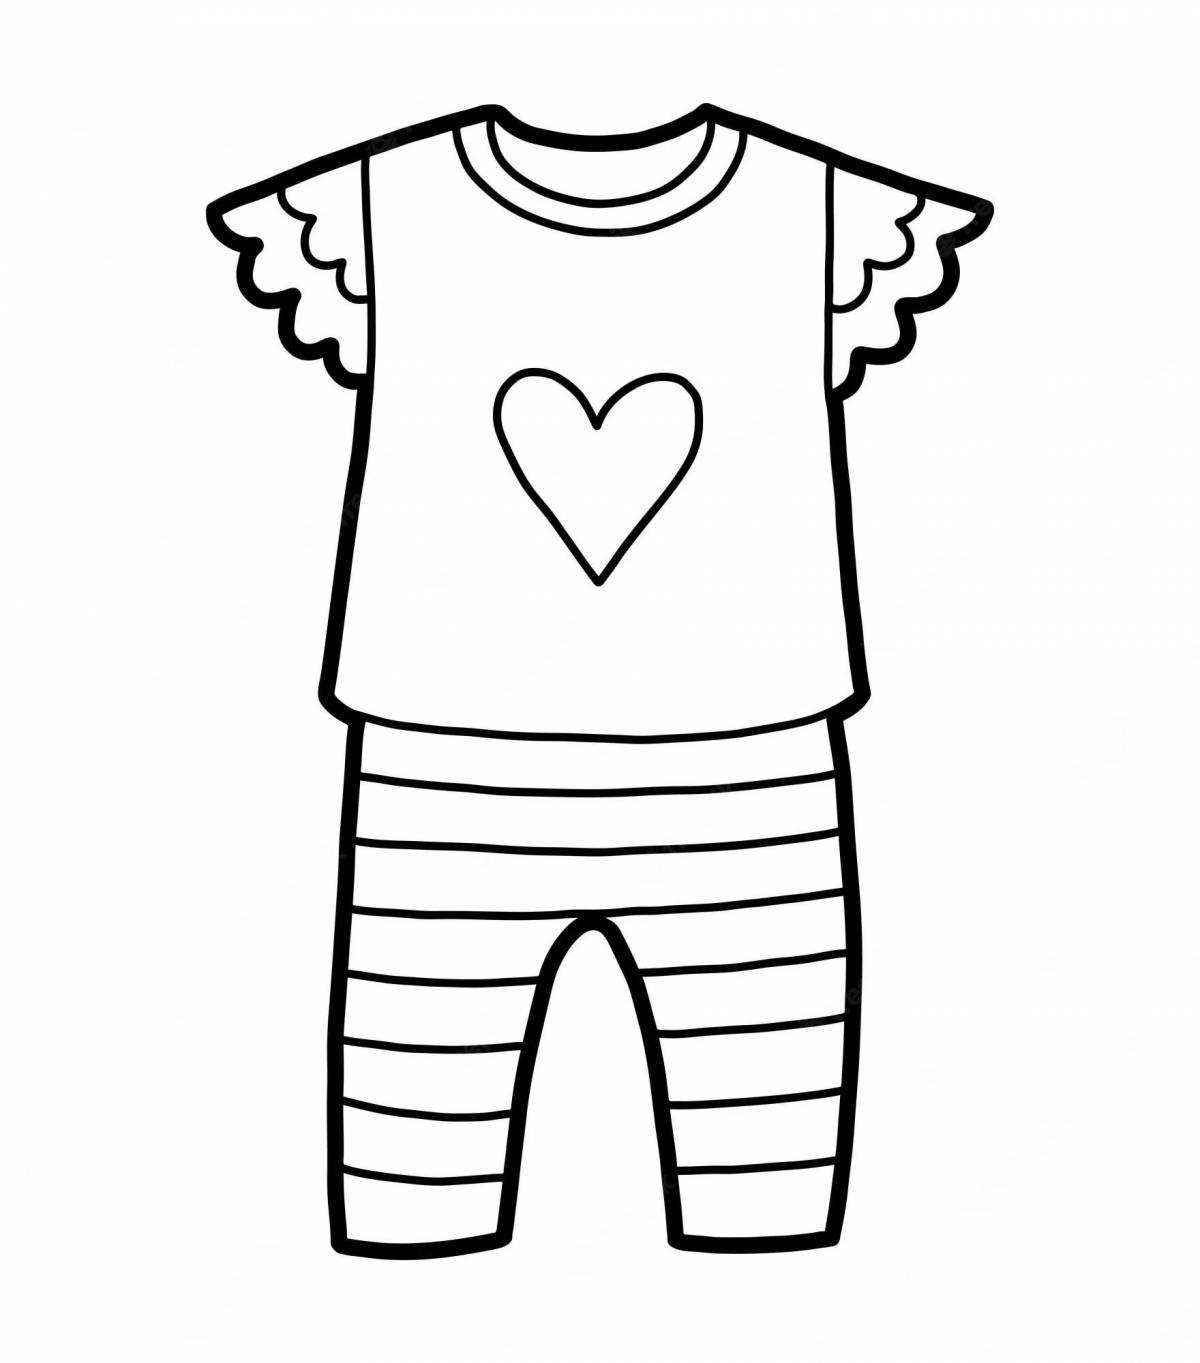 Fashion pajamas for children